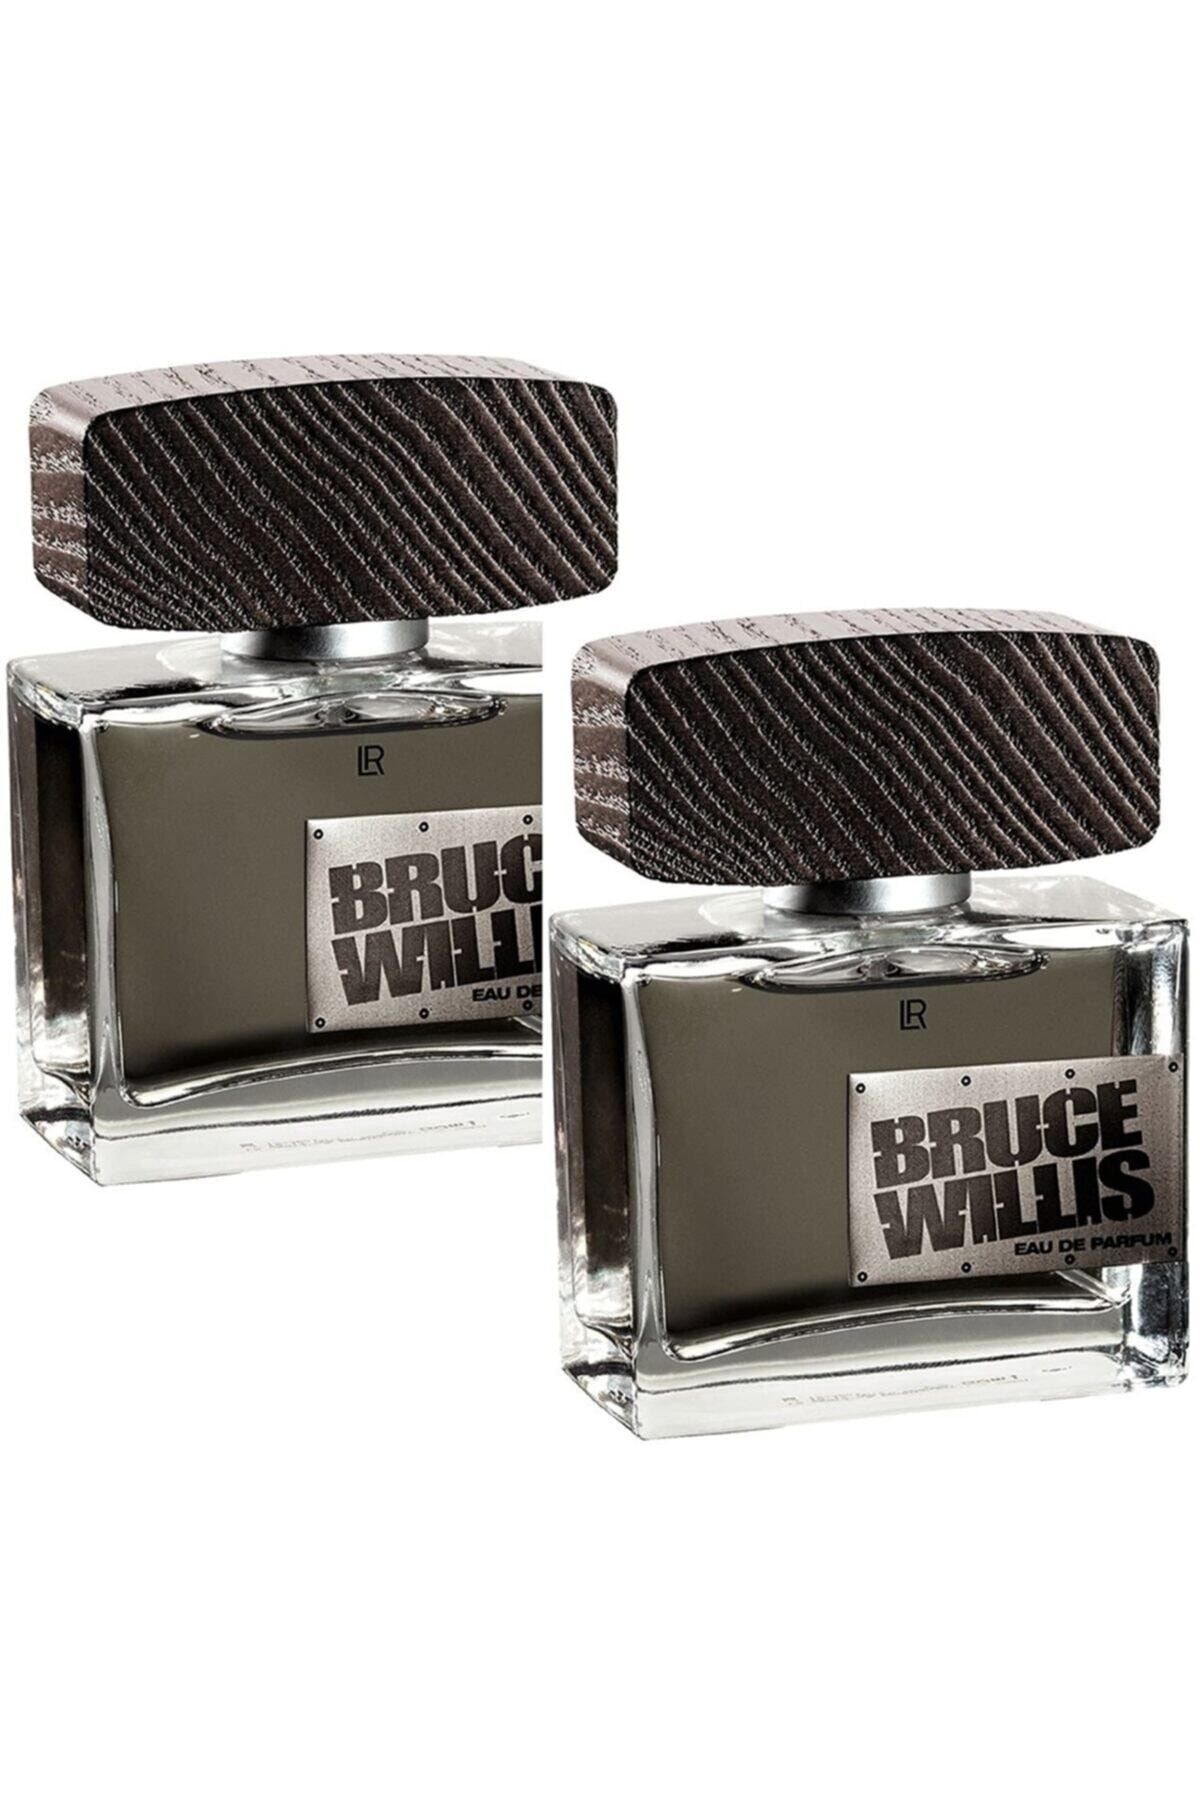 LR Bruce Willis Eau De Parfum Erkek Parfümü 50 ml X 2 Adet